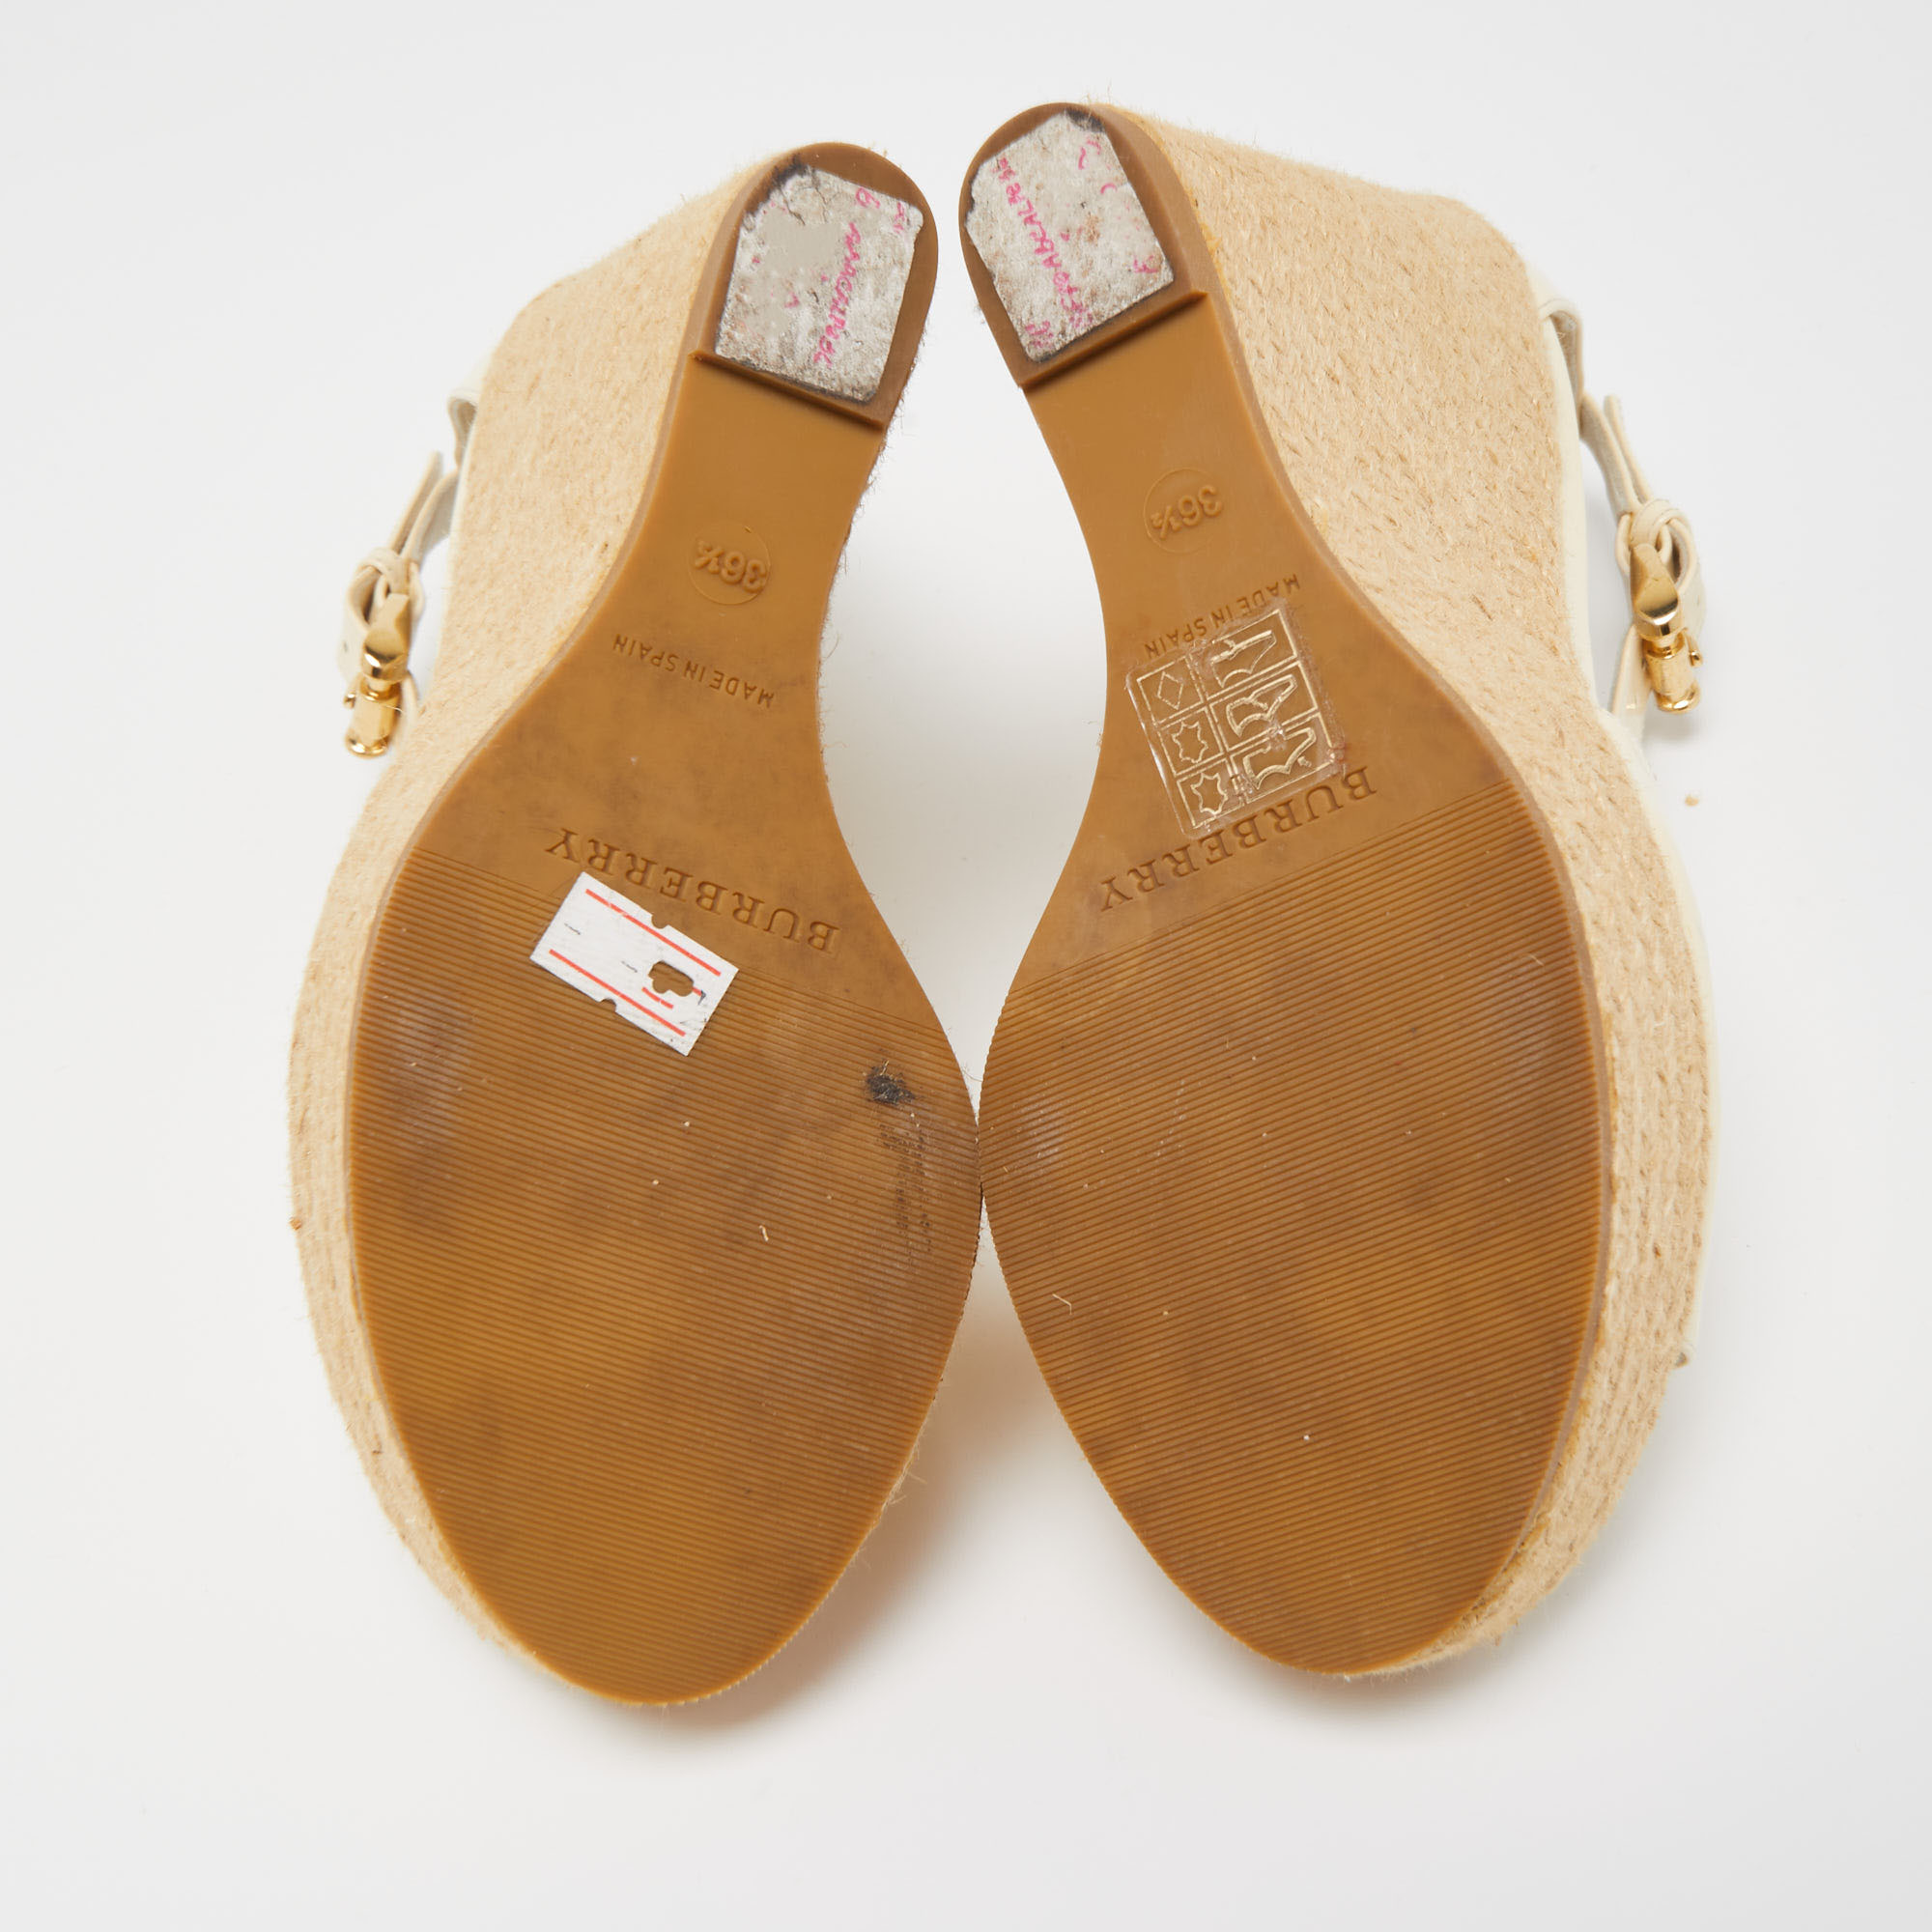 Burberry Cream Patent Peep Toe Wedge Espadrilles Sandals Size 36.5